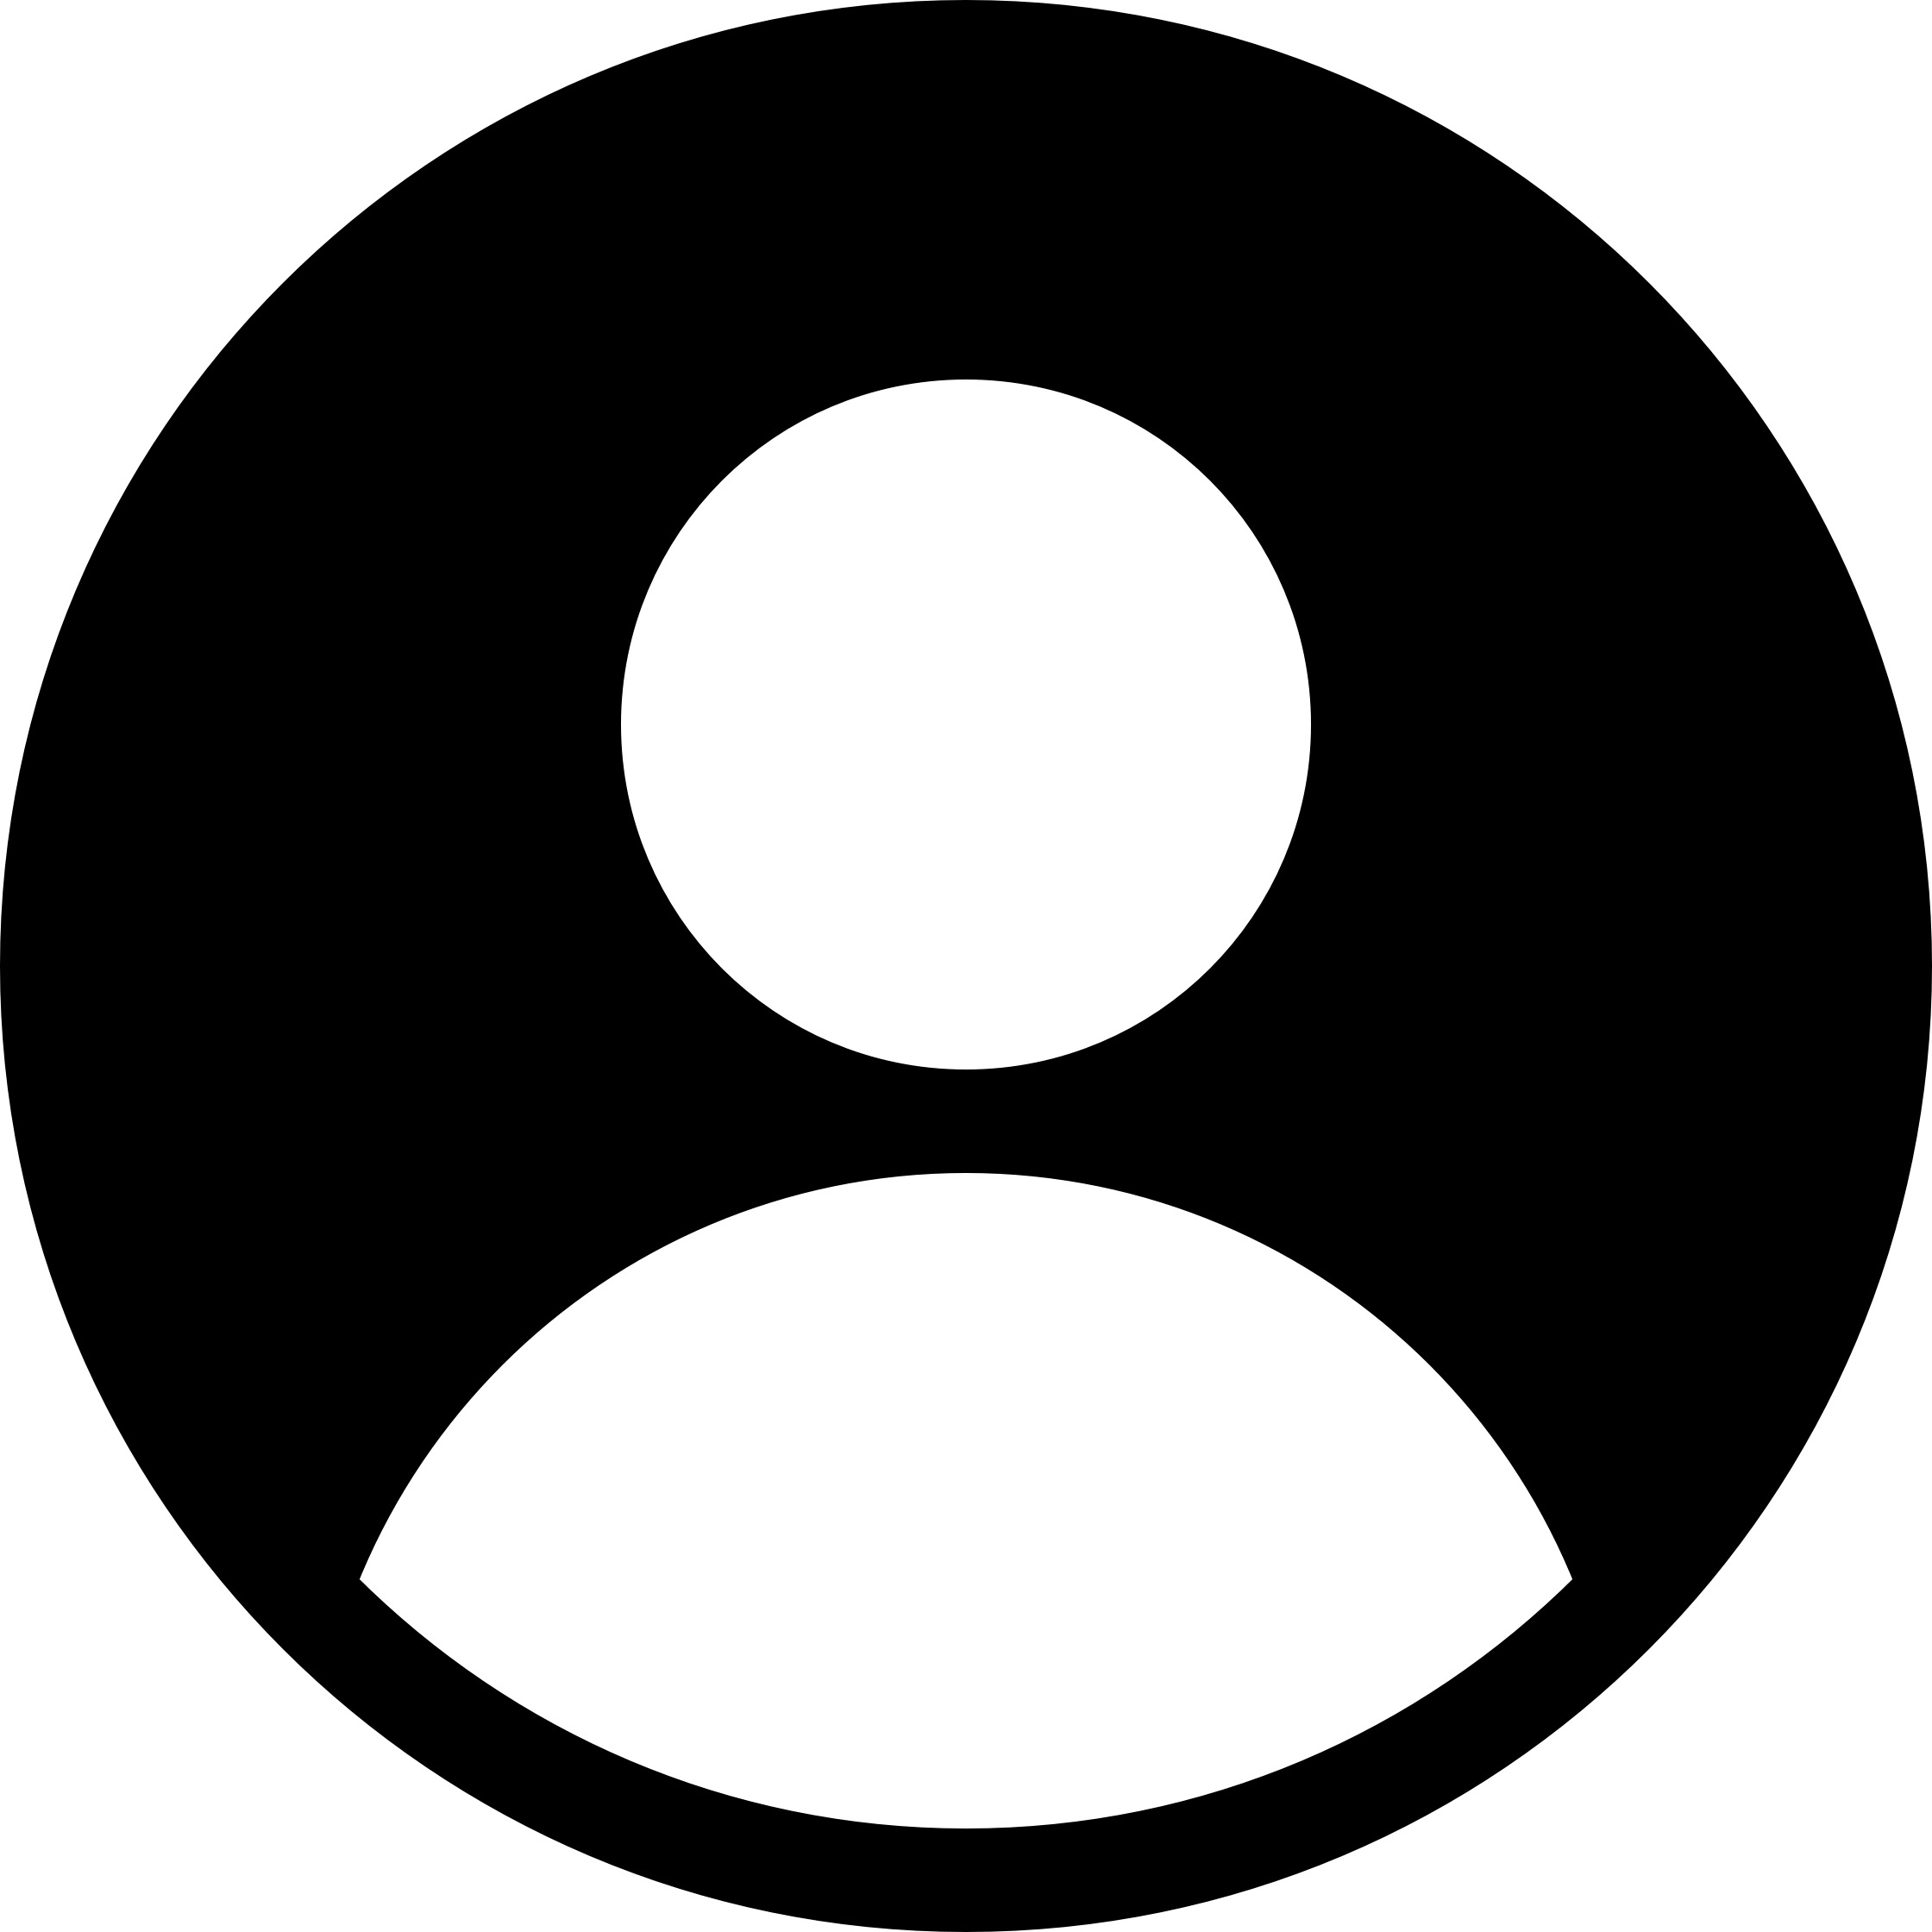 Circled User Icon icons